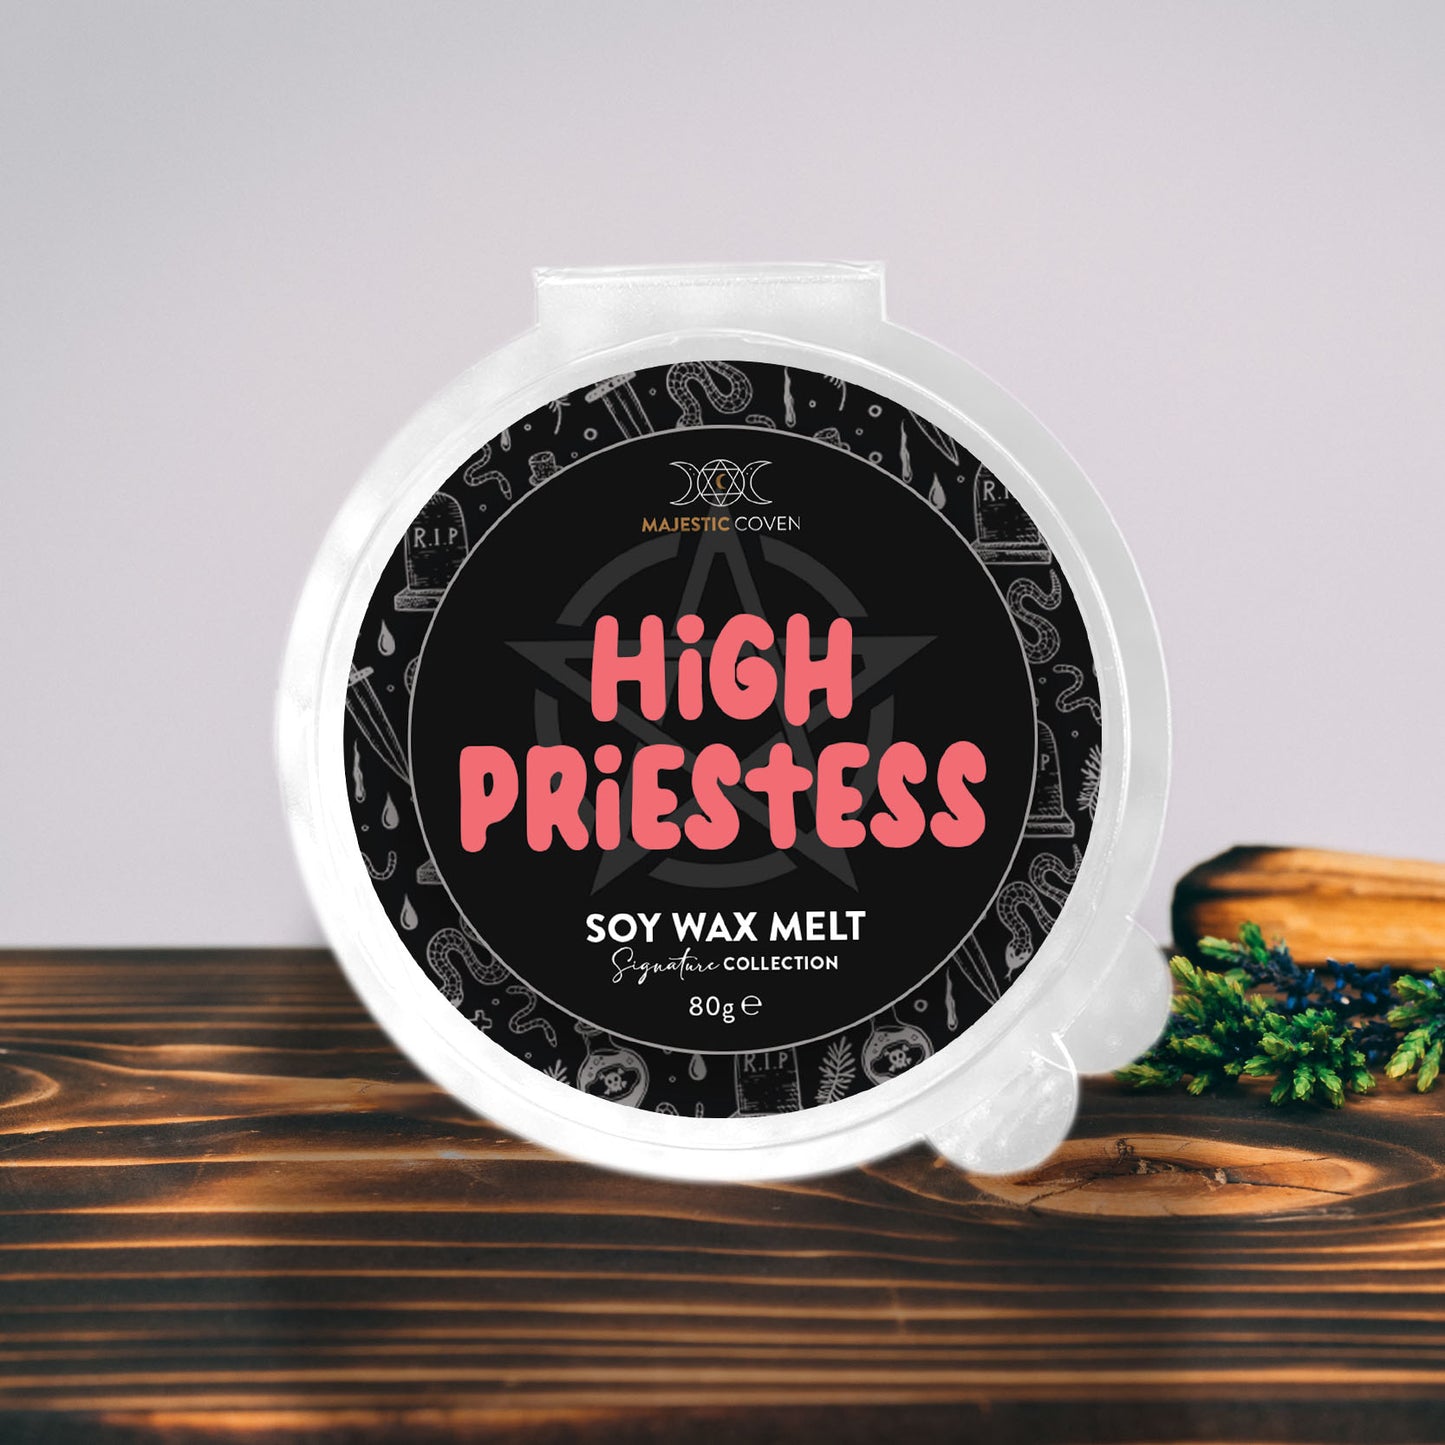 High Priestess - Soy Wax Melt 80g Segment Pot Majestic Coven